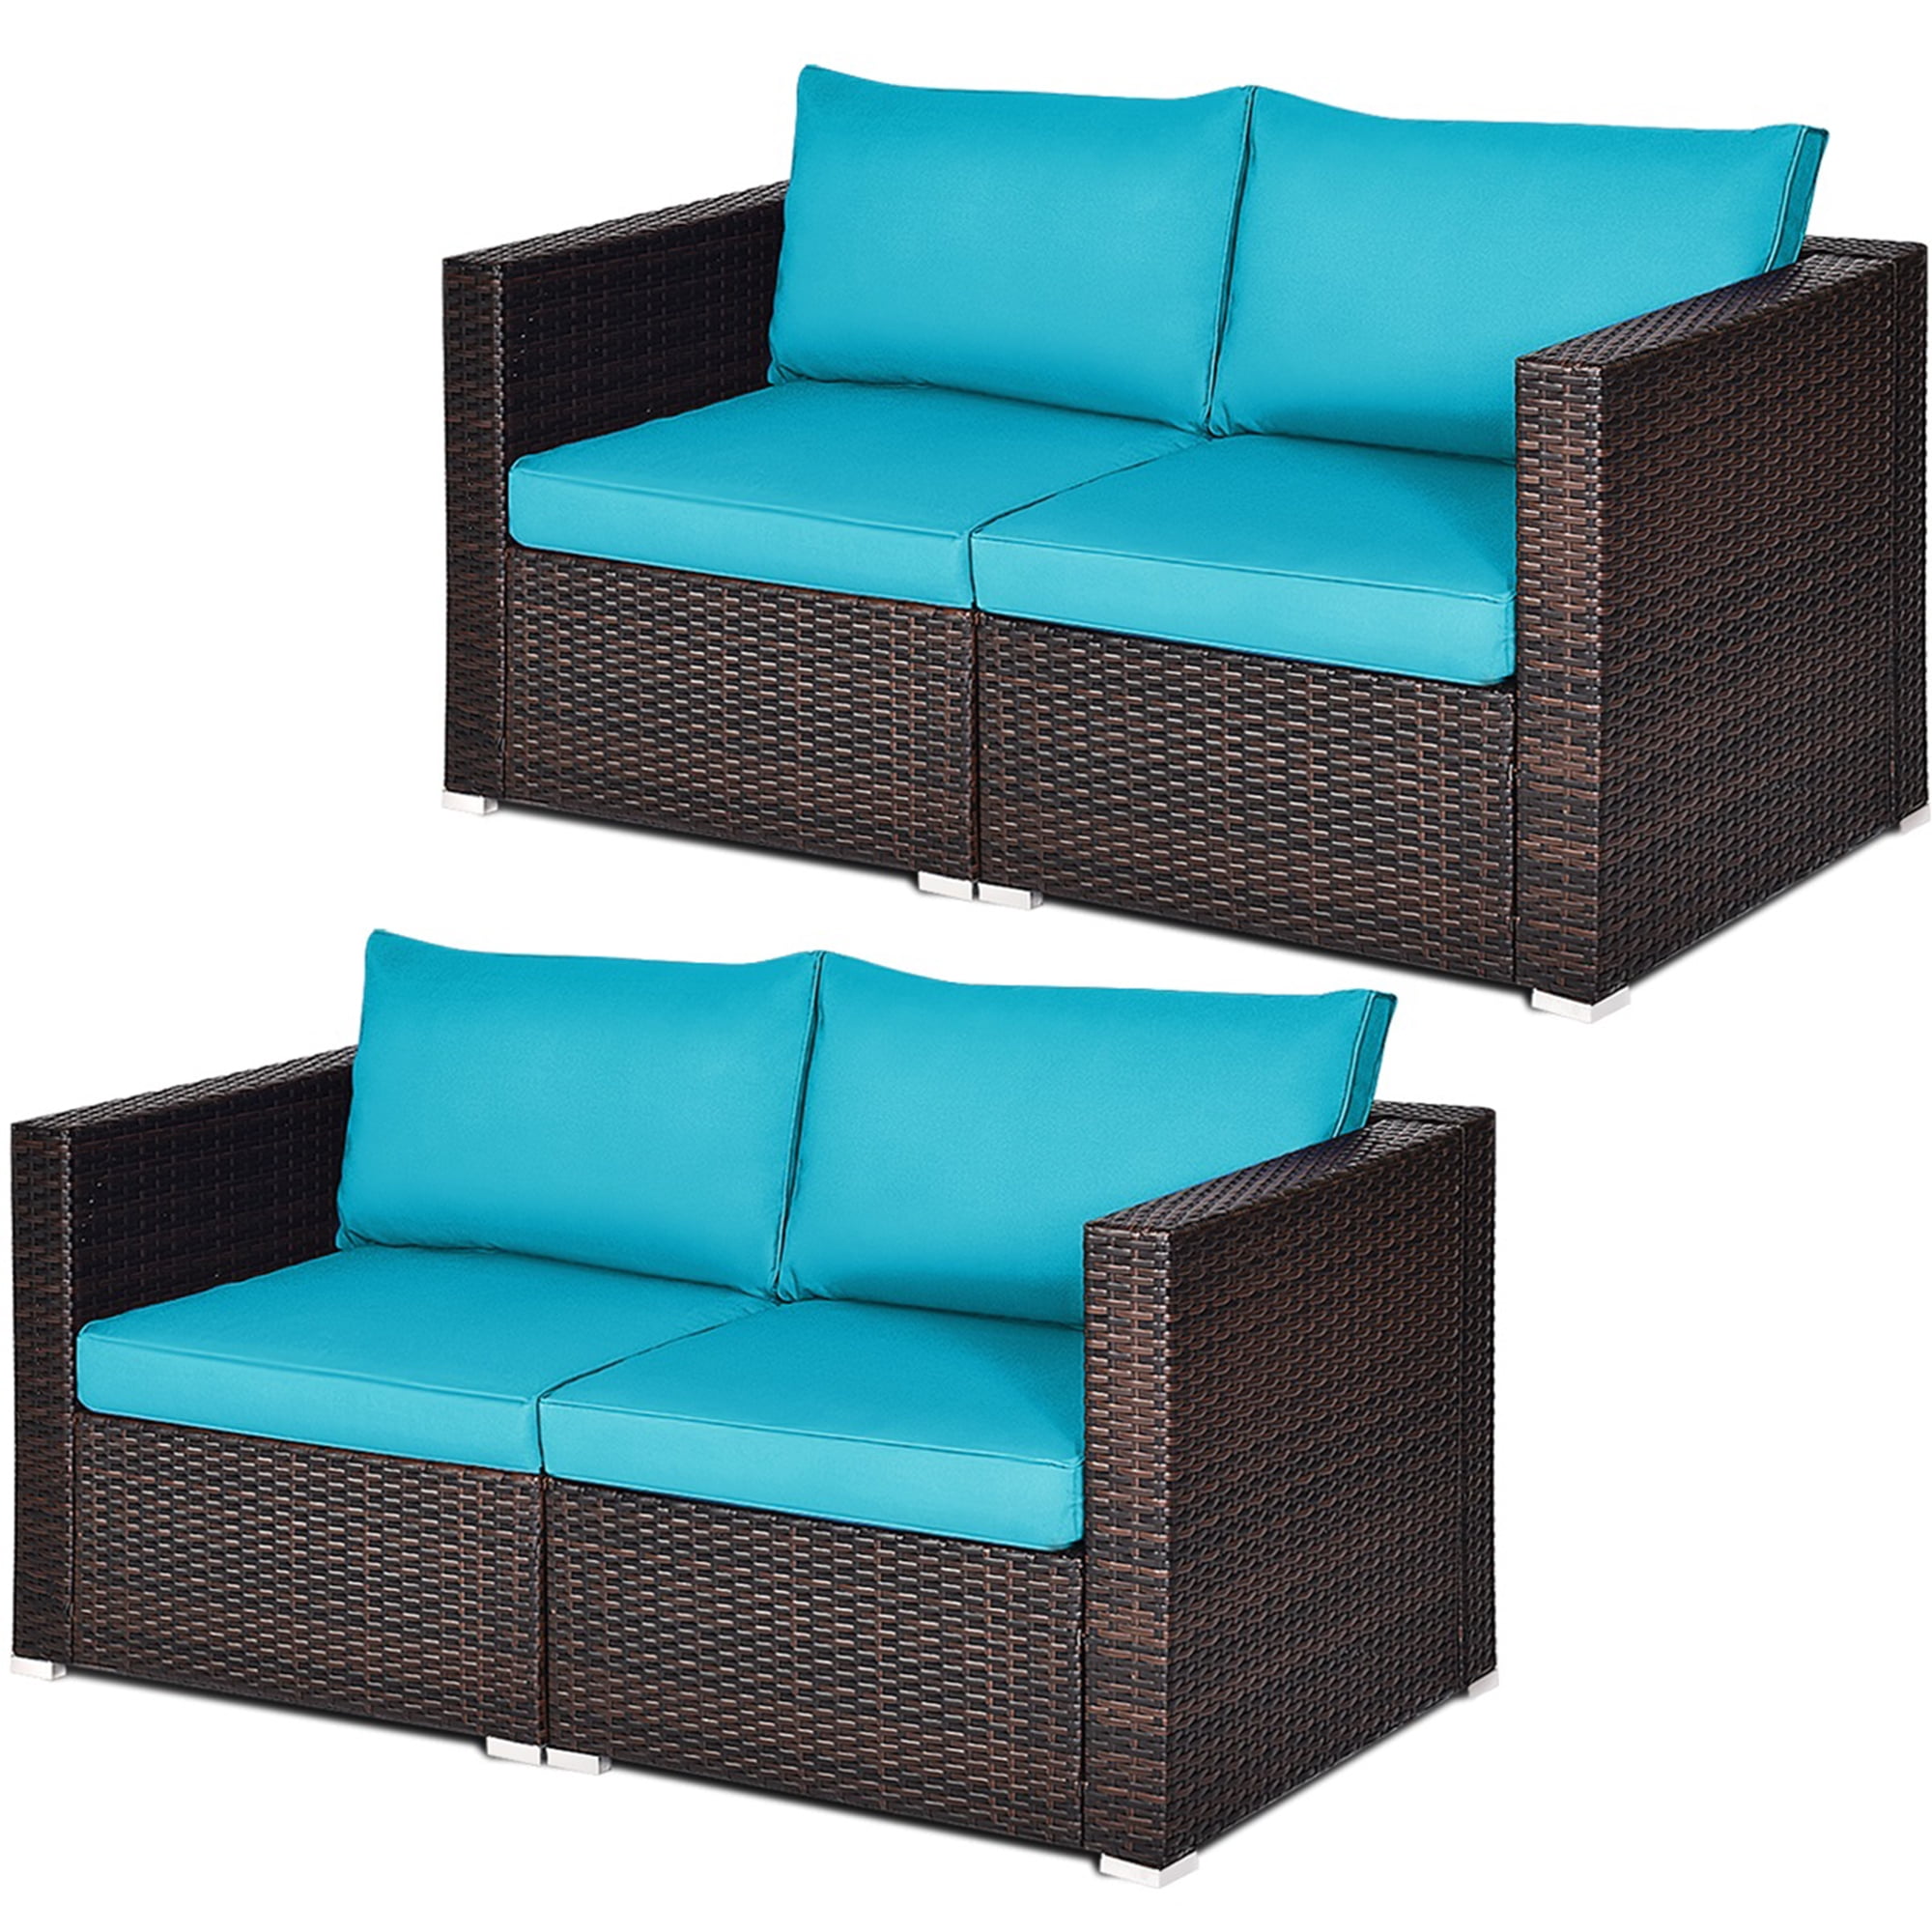 Gymax 4PCS Rattan Corner Sofa Set Patio Outdoor Furniture Set w/ Blue Cushions